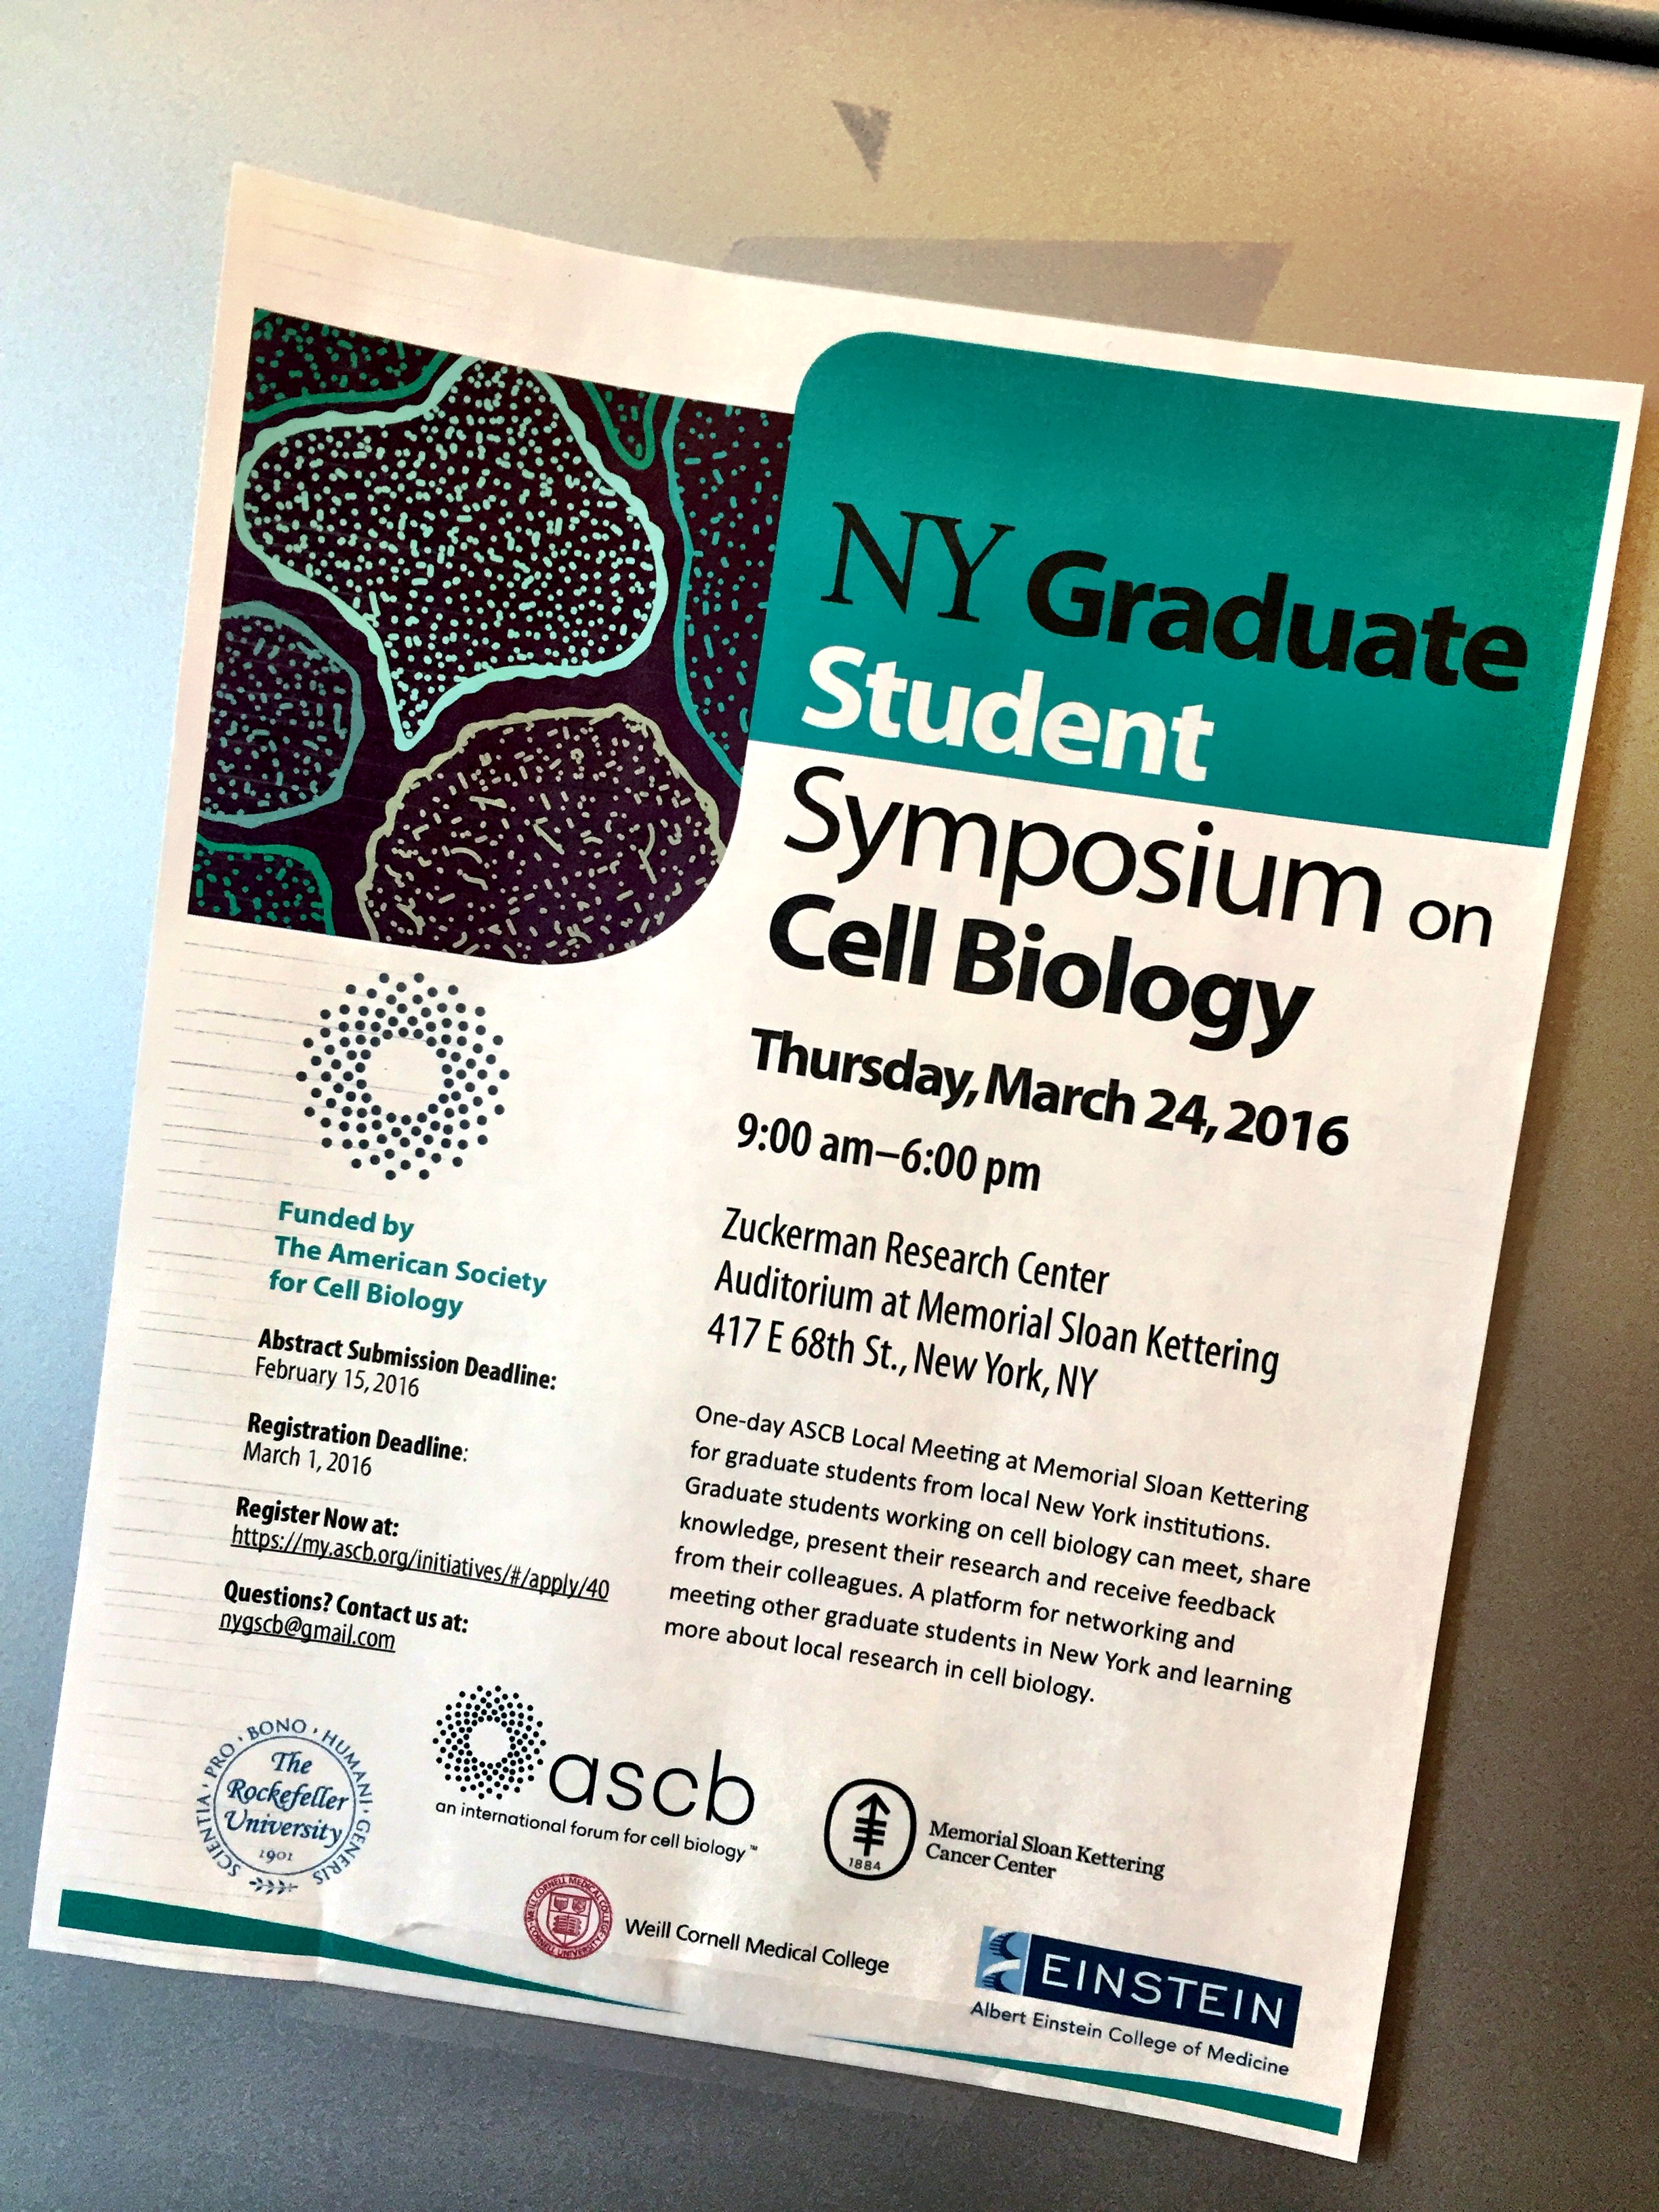 NY Graduate Student Cell Biology Symposium